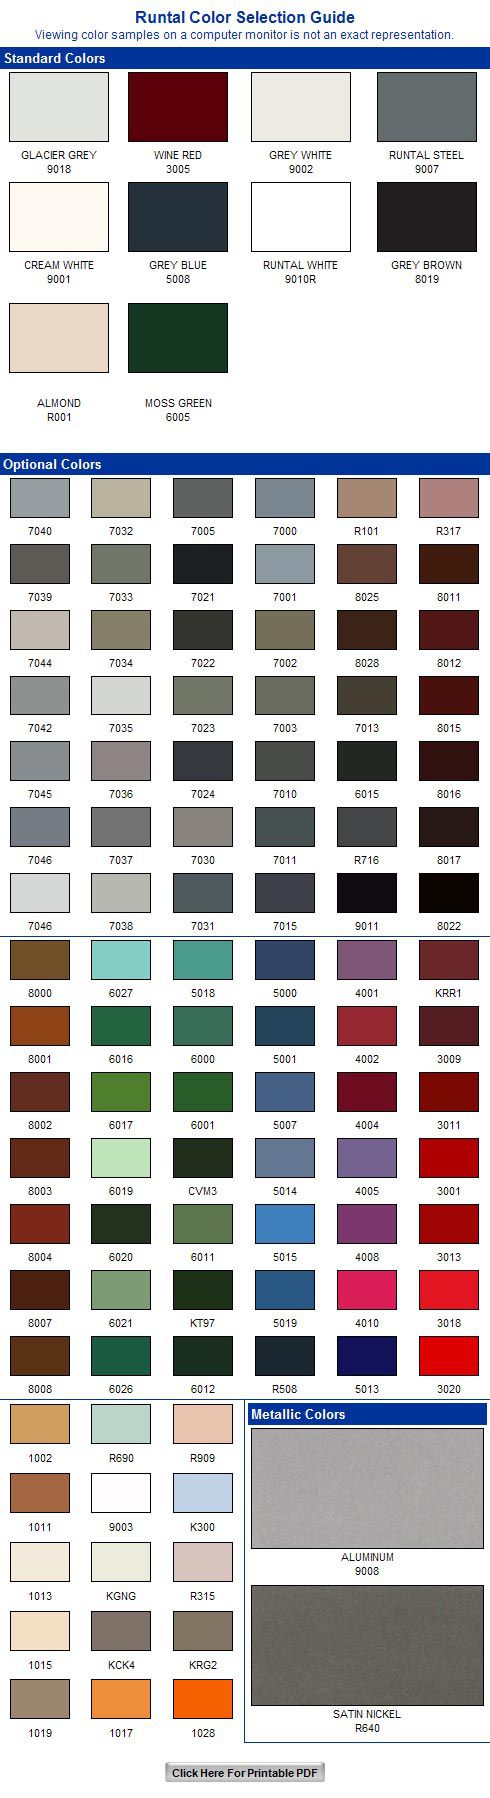 Runtal Color Chart